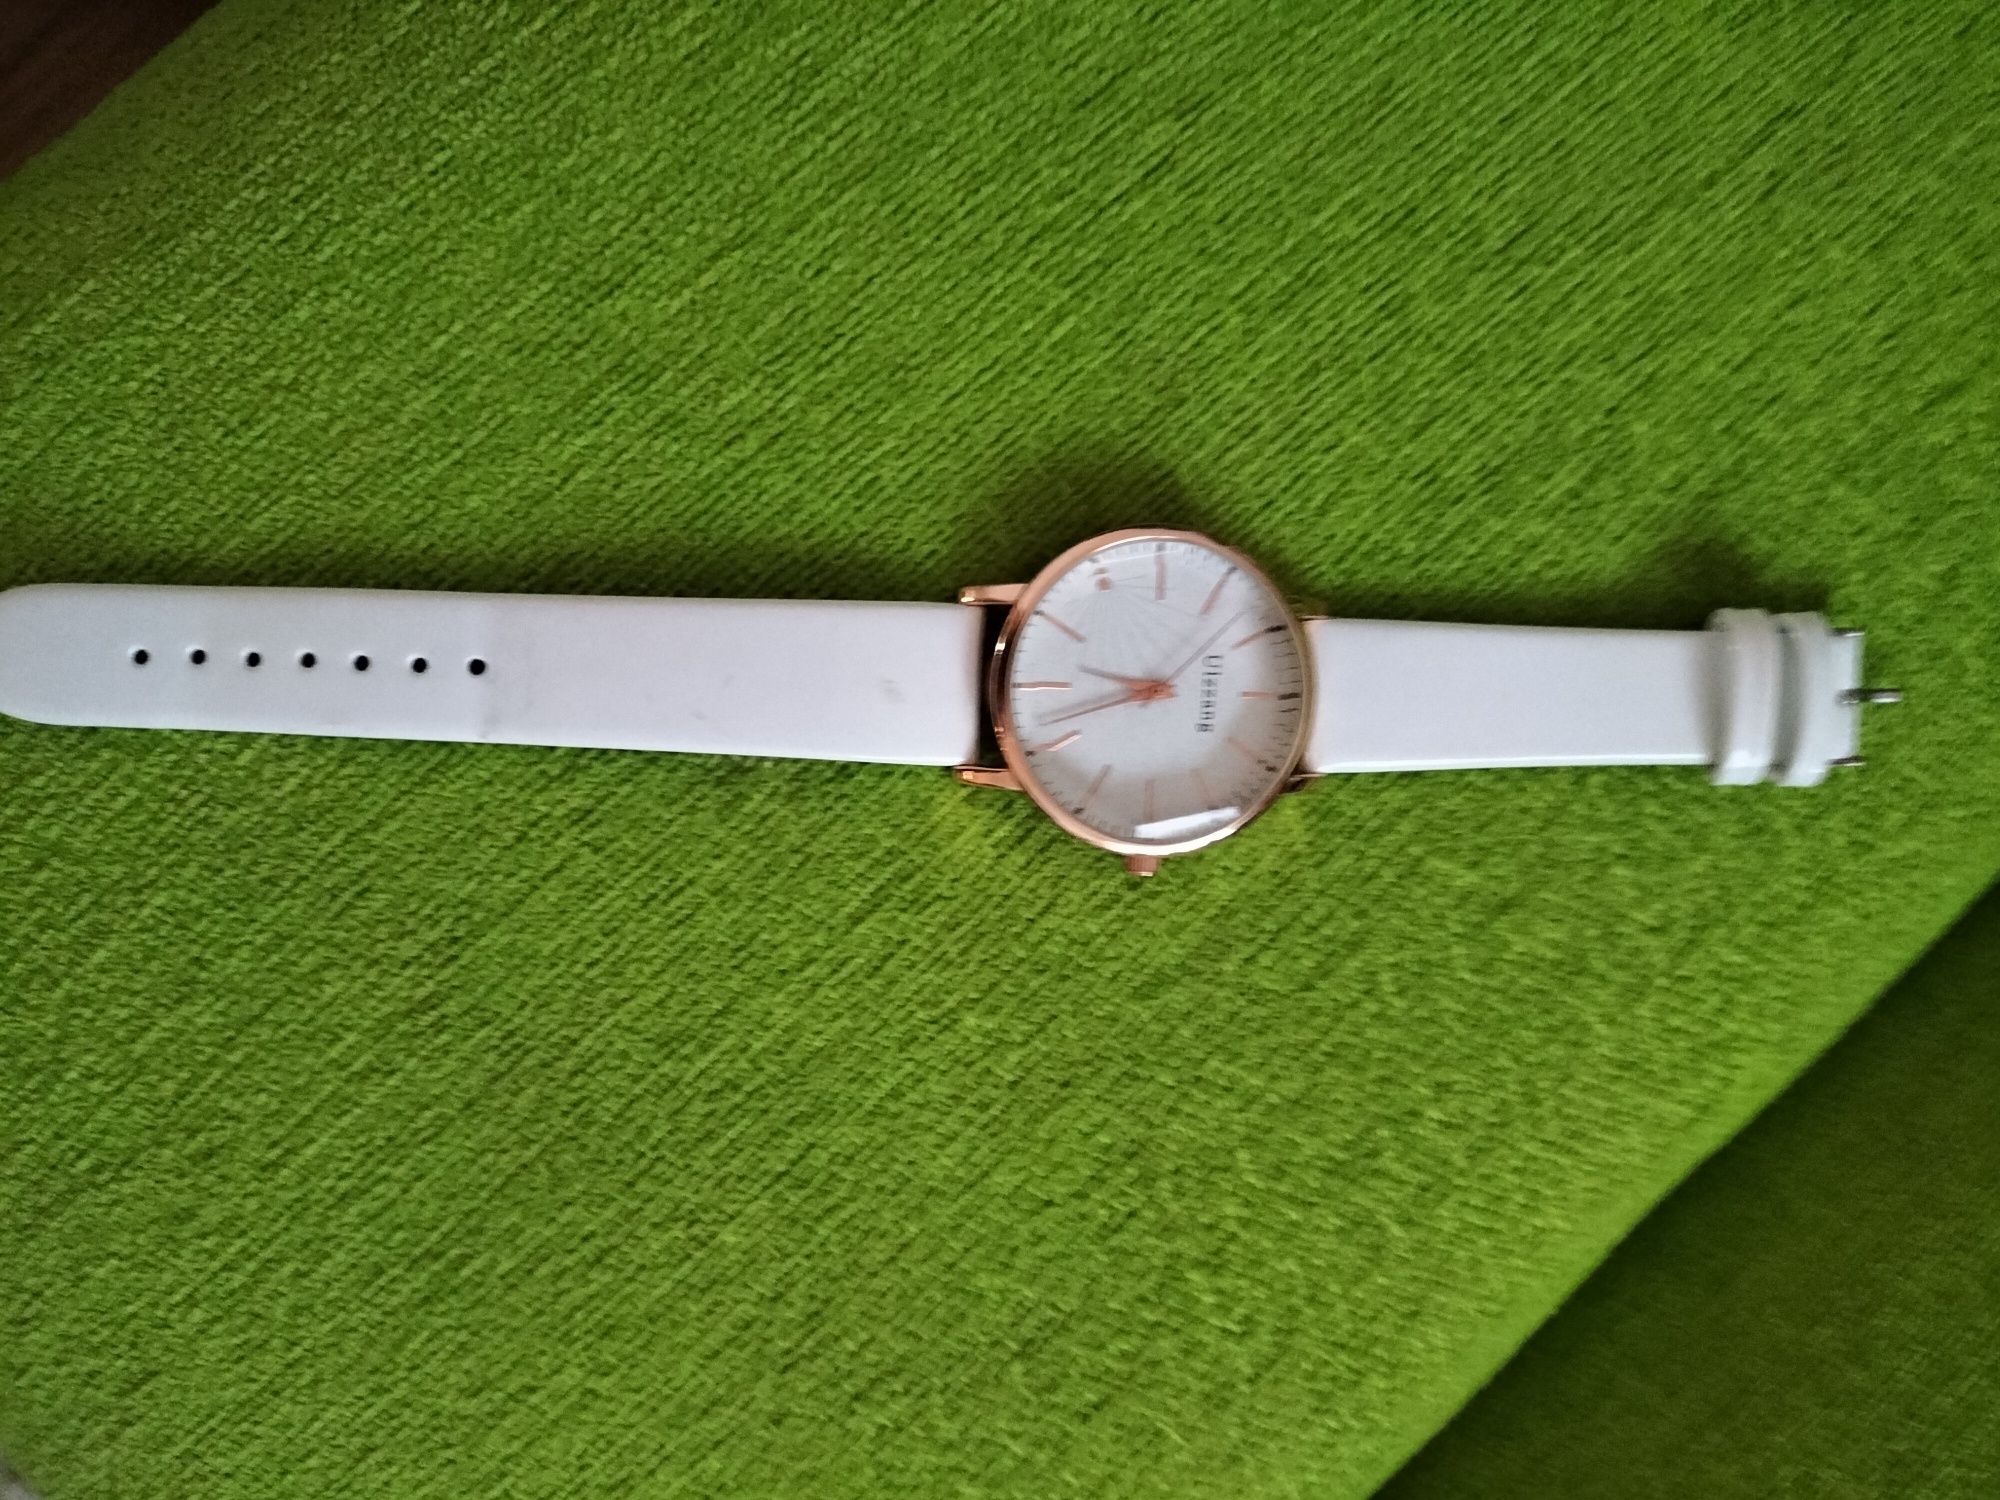 Zegarek damski biały